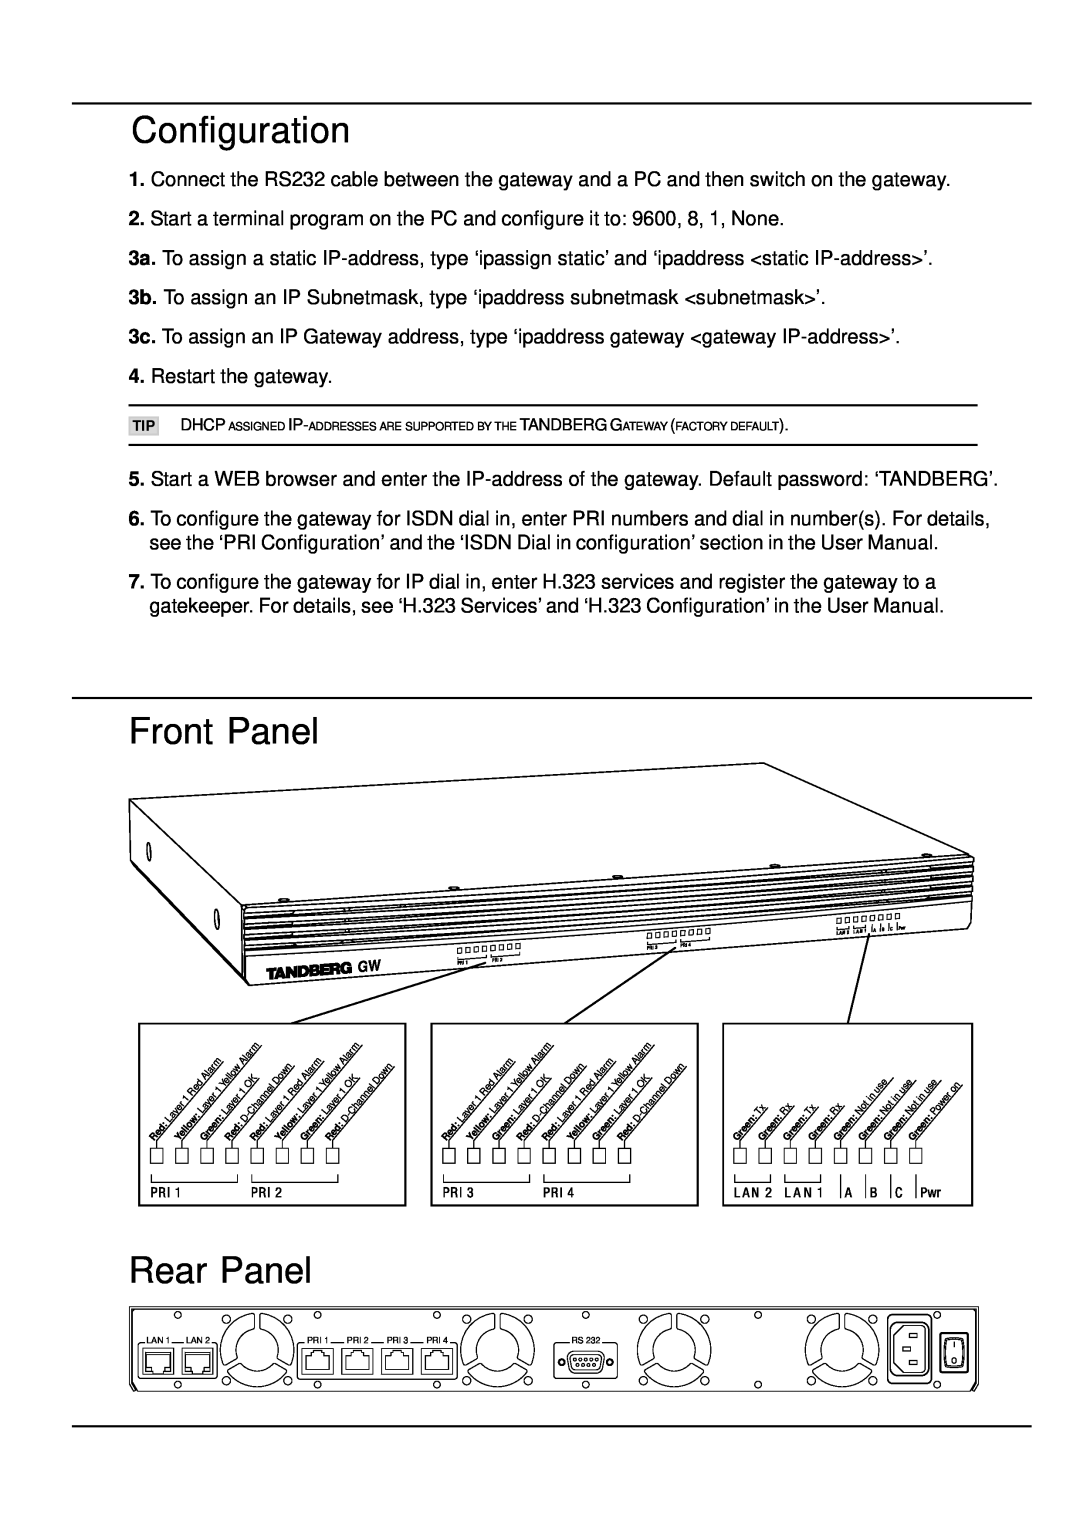 TANDBERG 6213 user manual Configuration, Front Panel, Rear Panel 